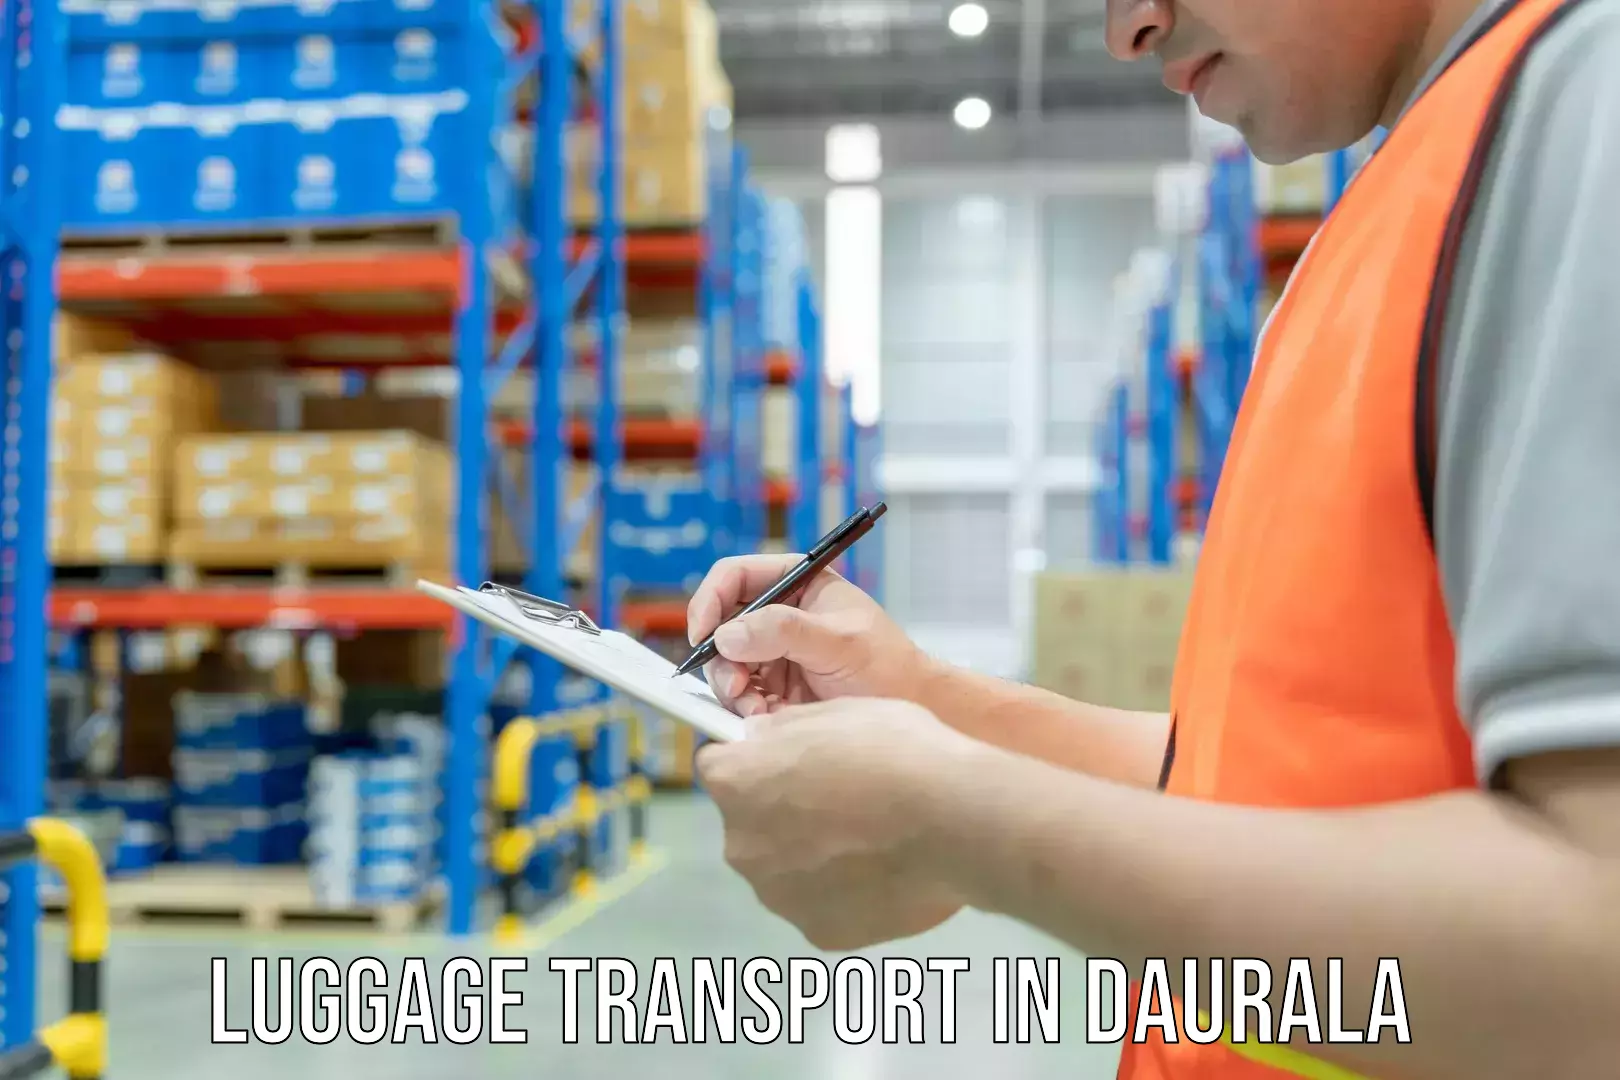 Luggage forwarding service in Daurala